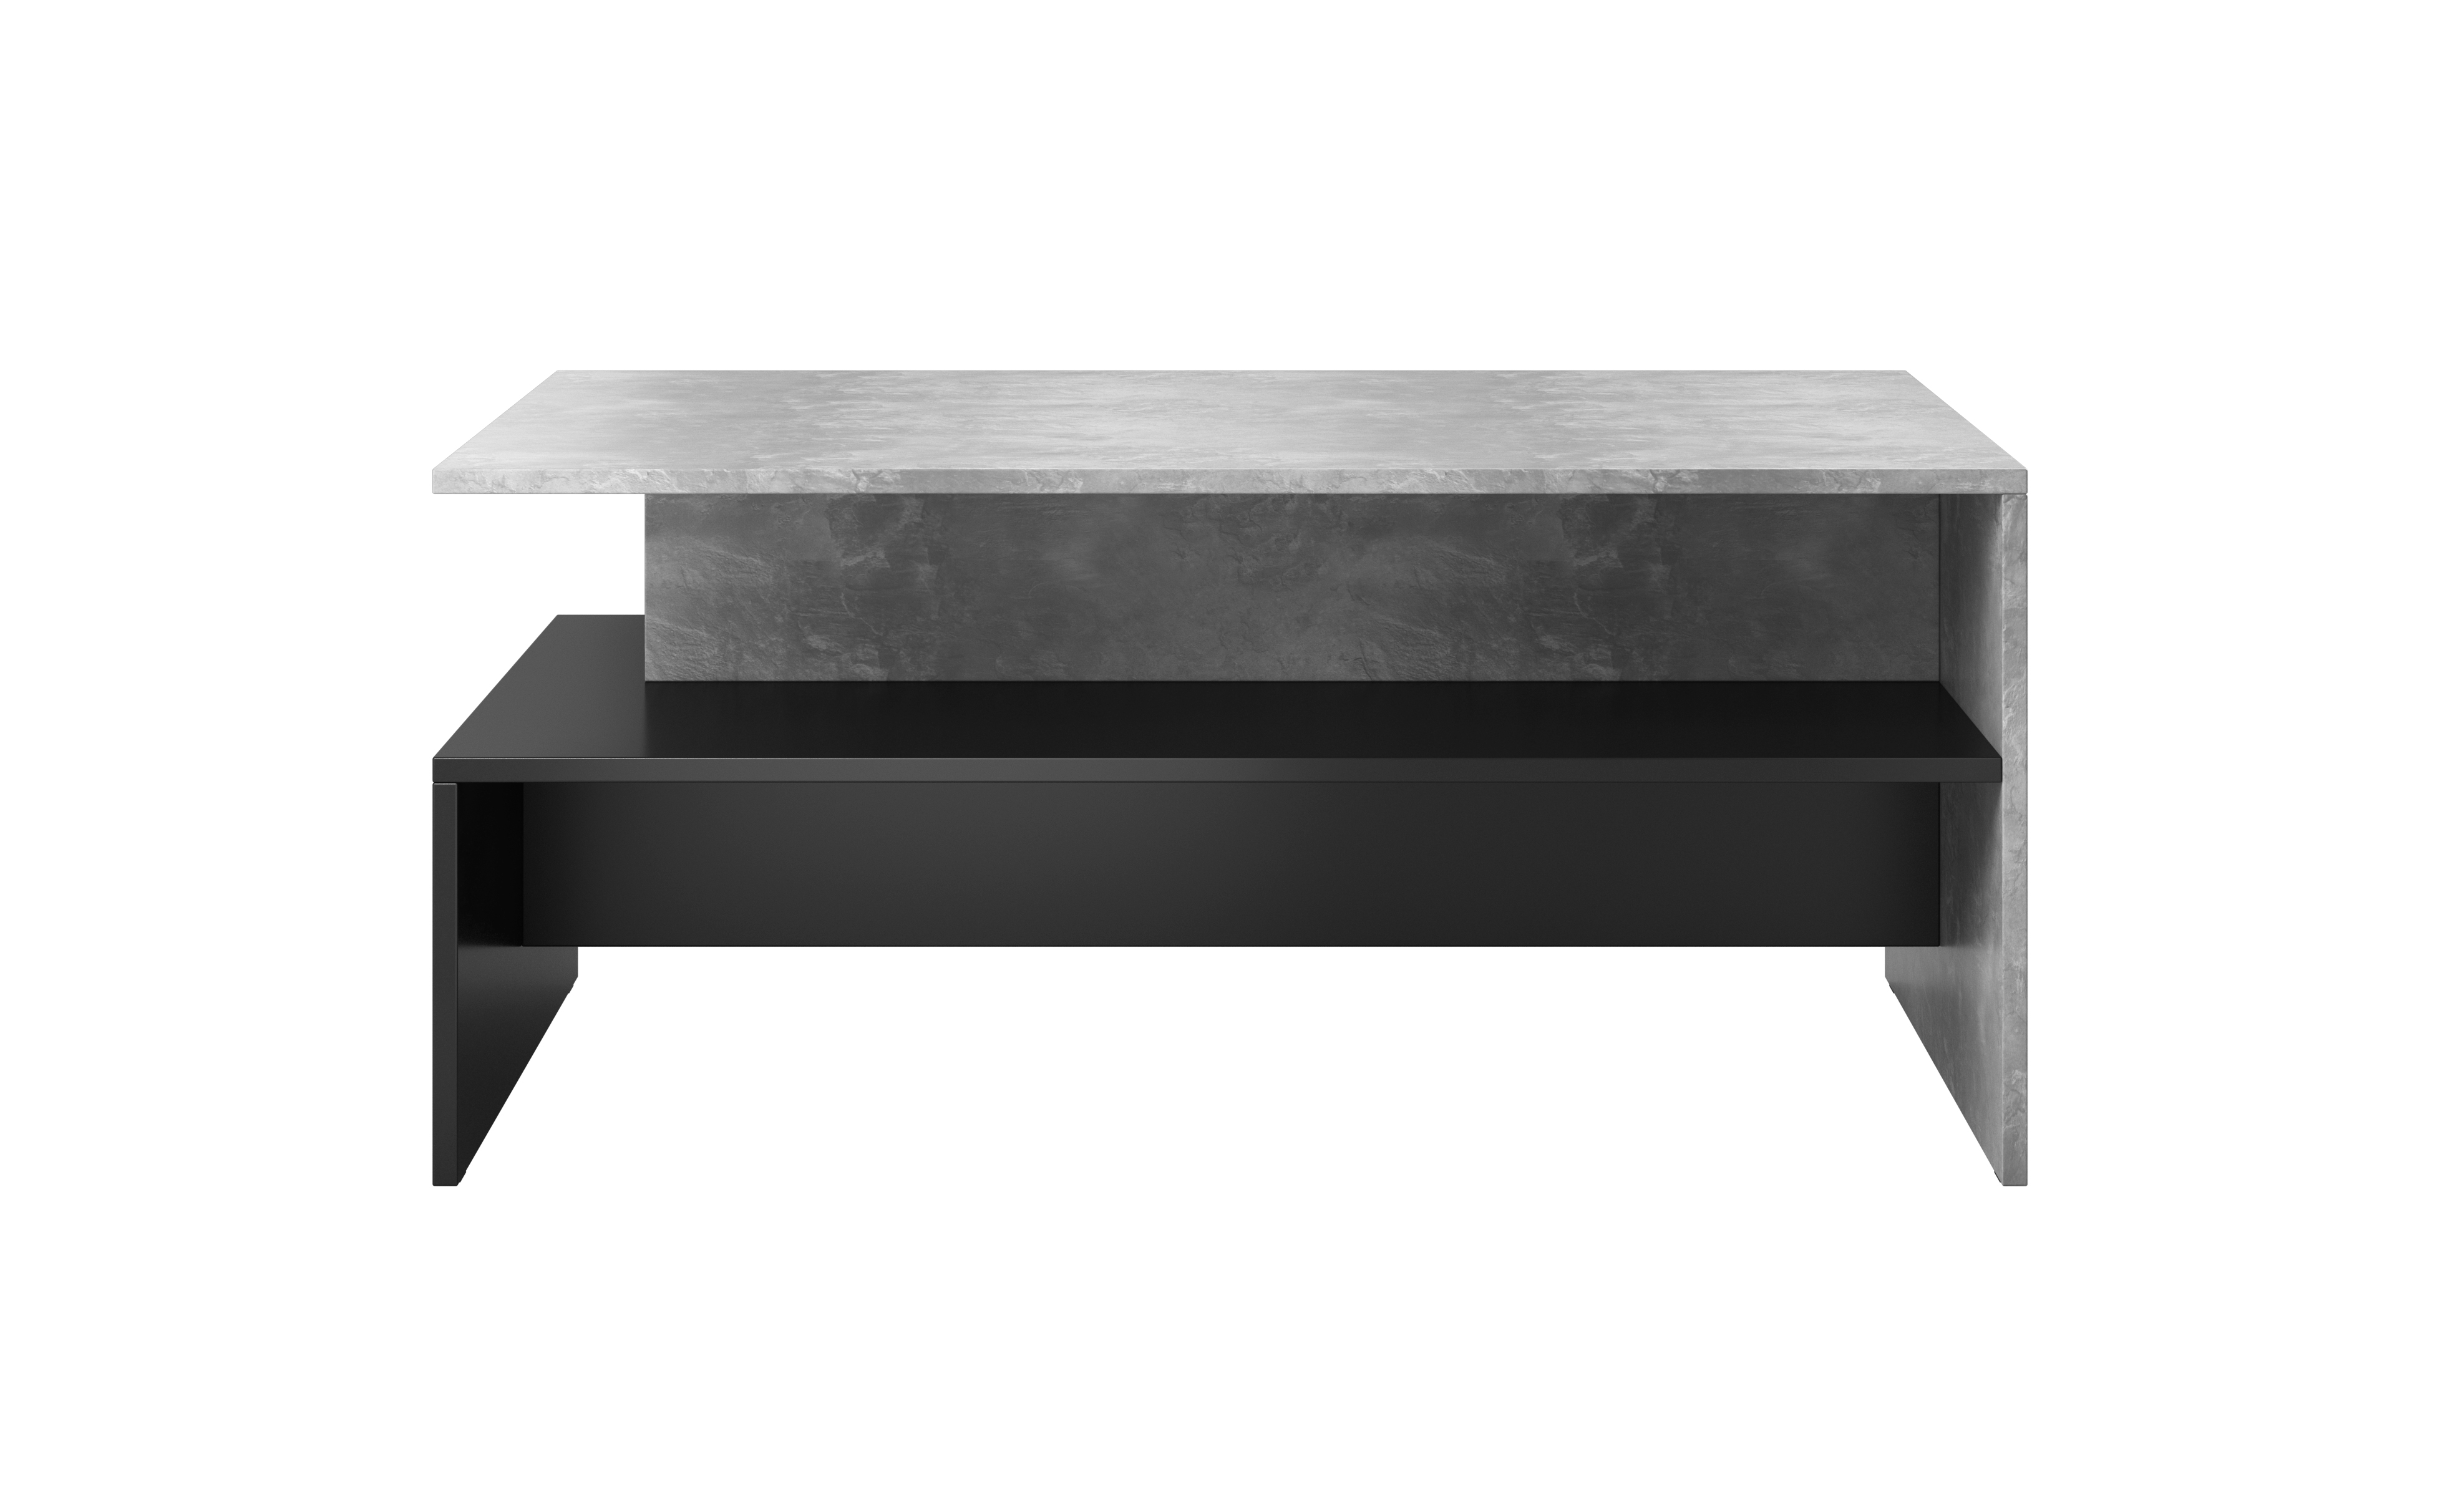 Helvetia Konferenení stolek BAROS Helvetia 100/45/60 Barevné provedení: světlý beton